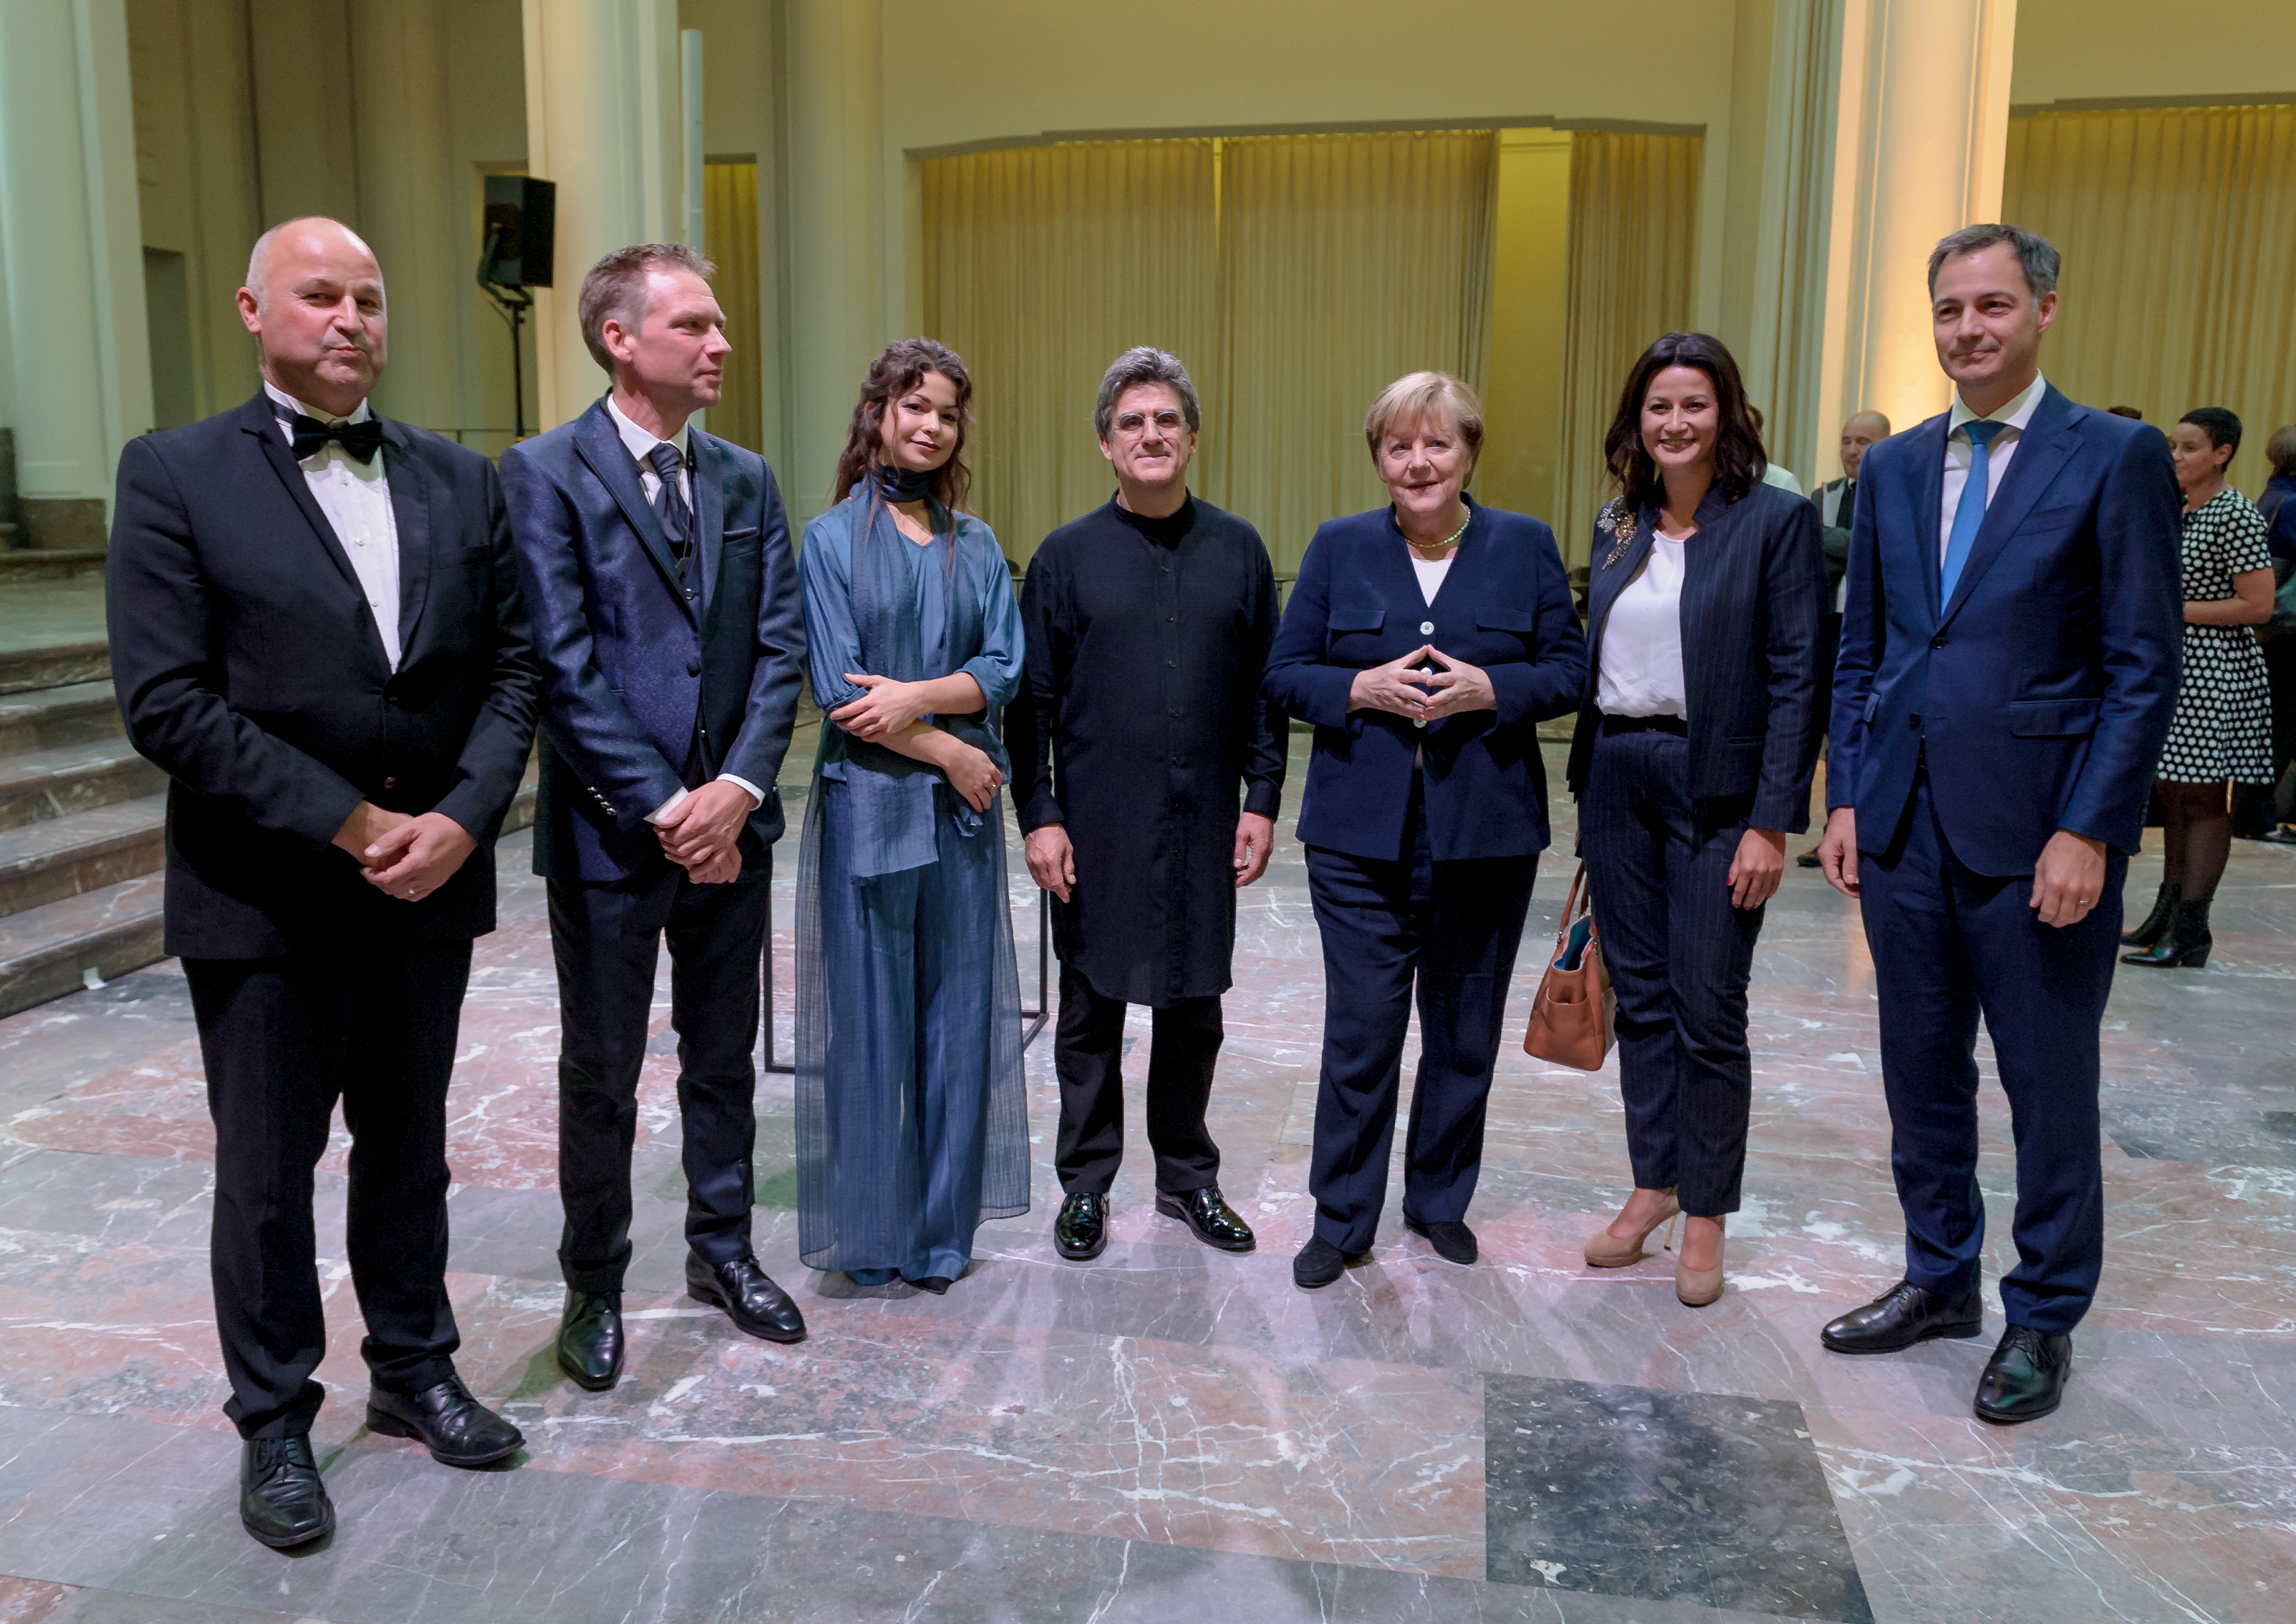 Gala 2021 with Angela Merkel and Belgian Prime Minister Alexander de Croo.